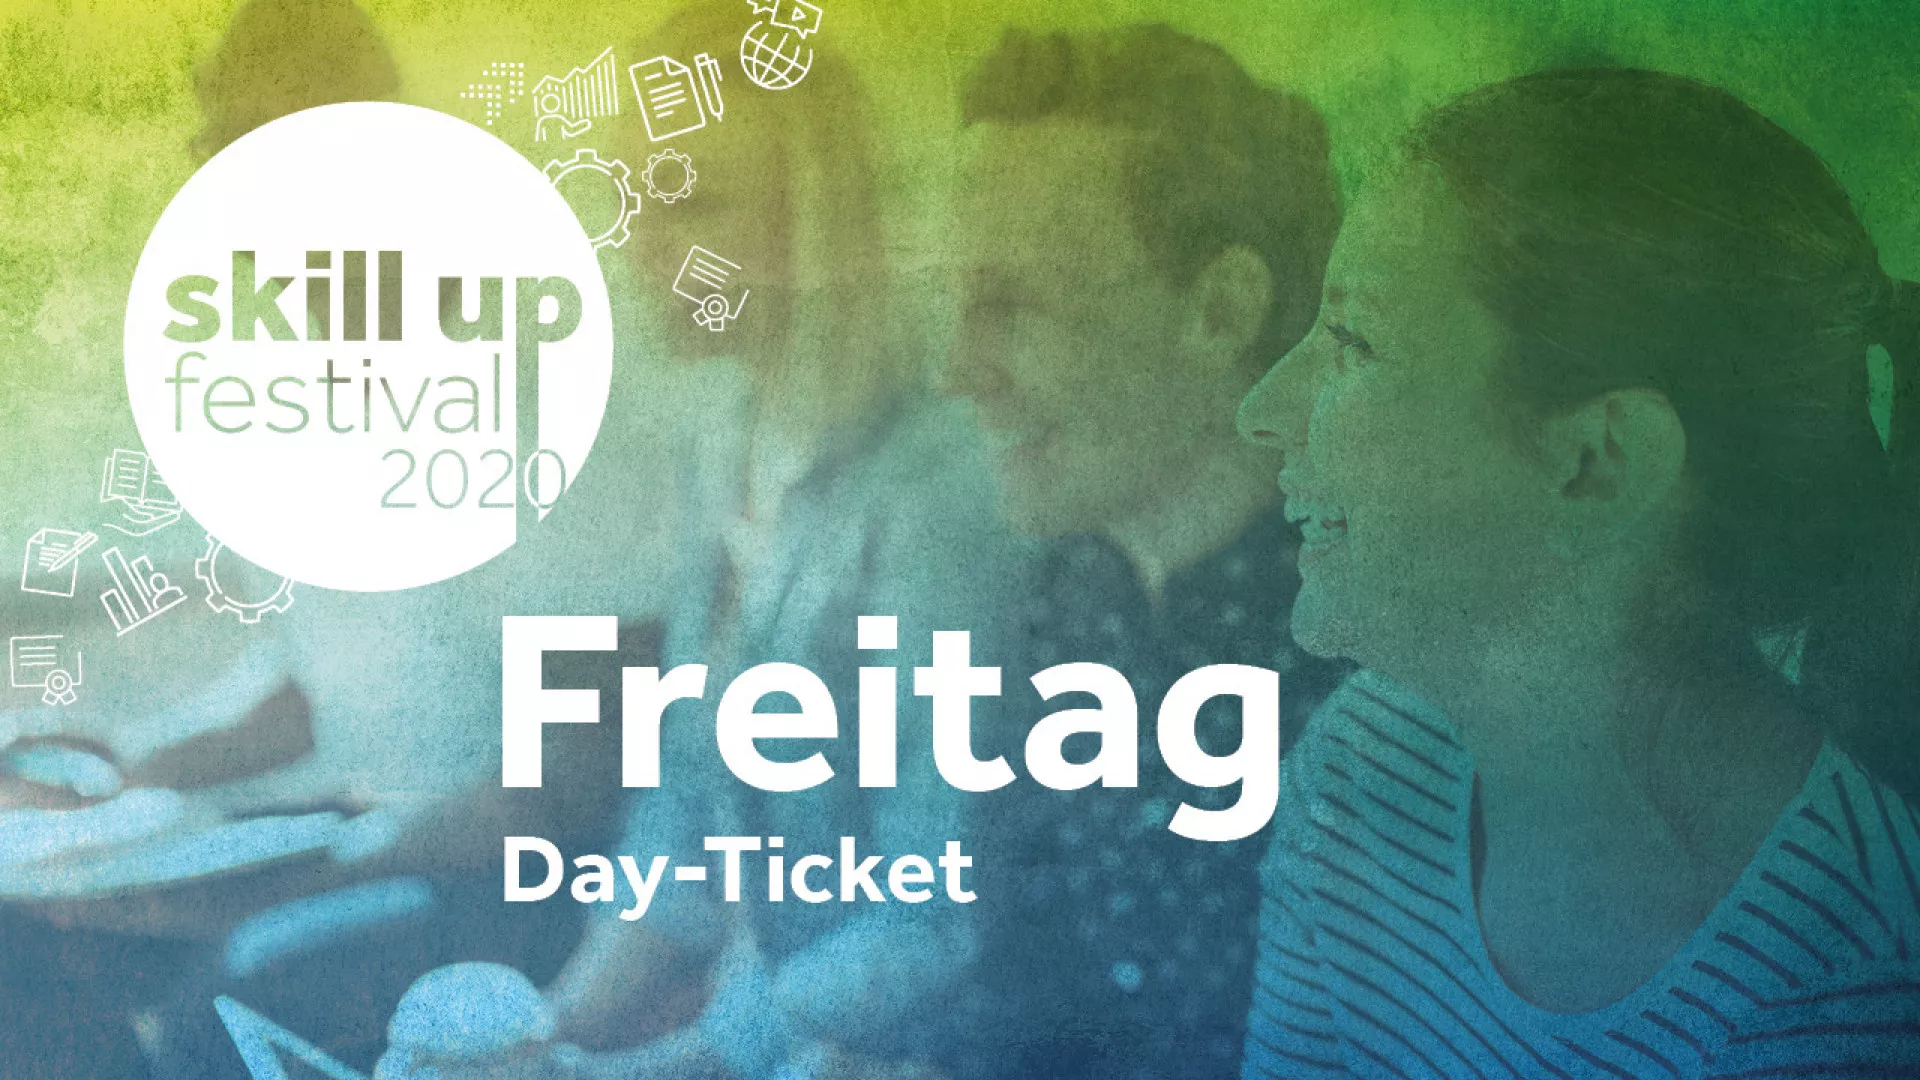 Skill Up Festival Day-Ticket Freitag, 30.10.2020, Bild, image, skilltrainer, kv business school zürich, foto